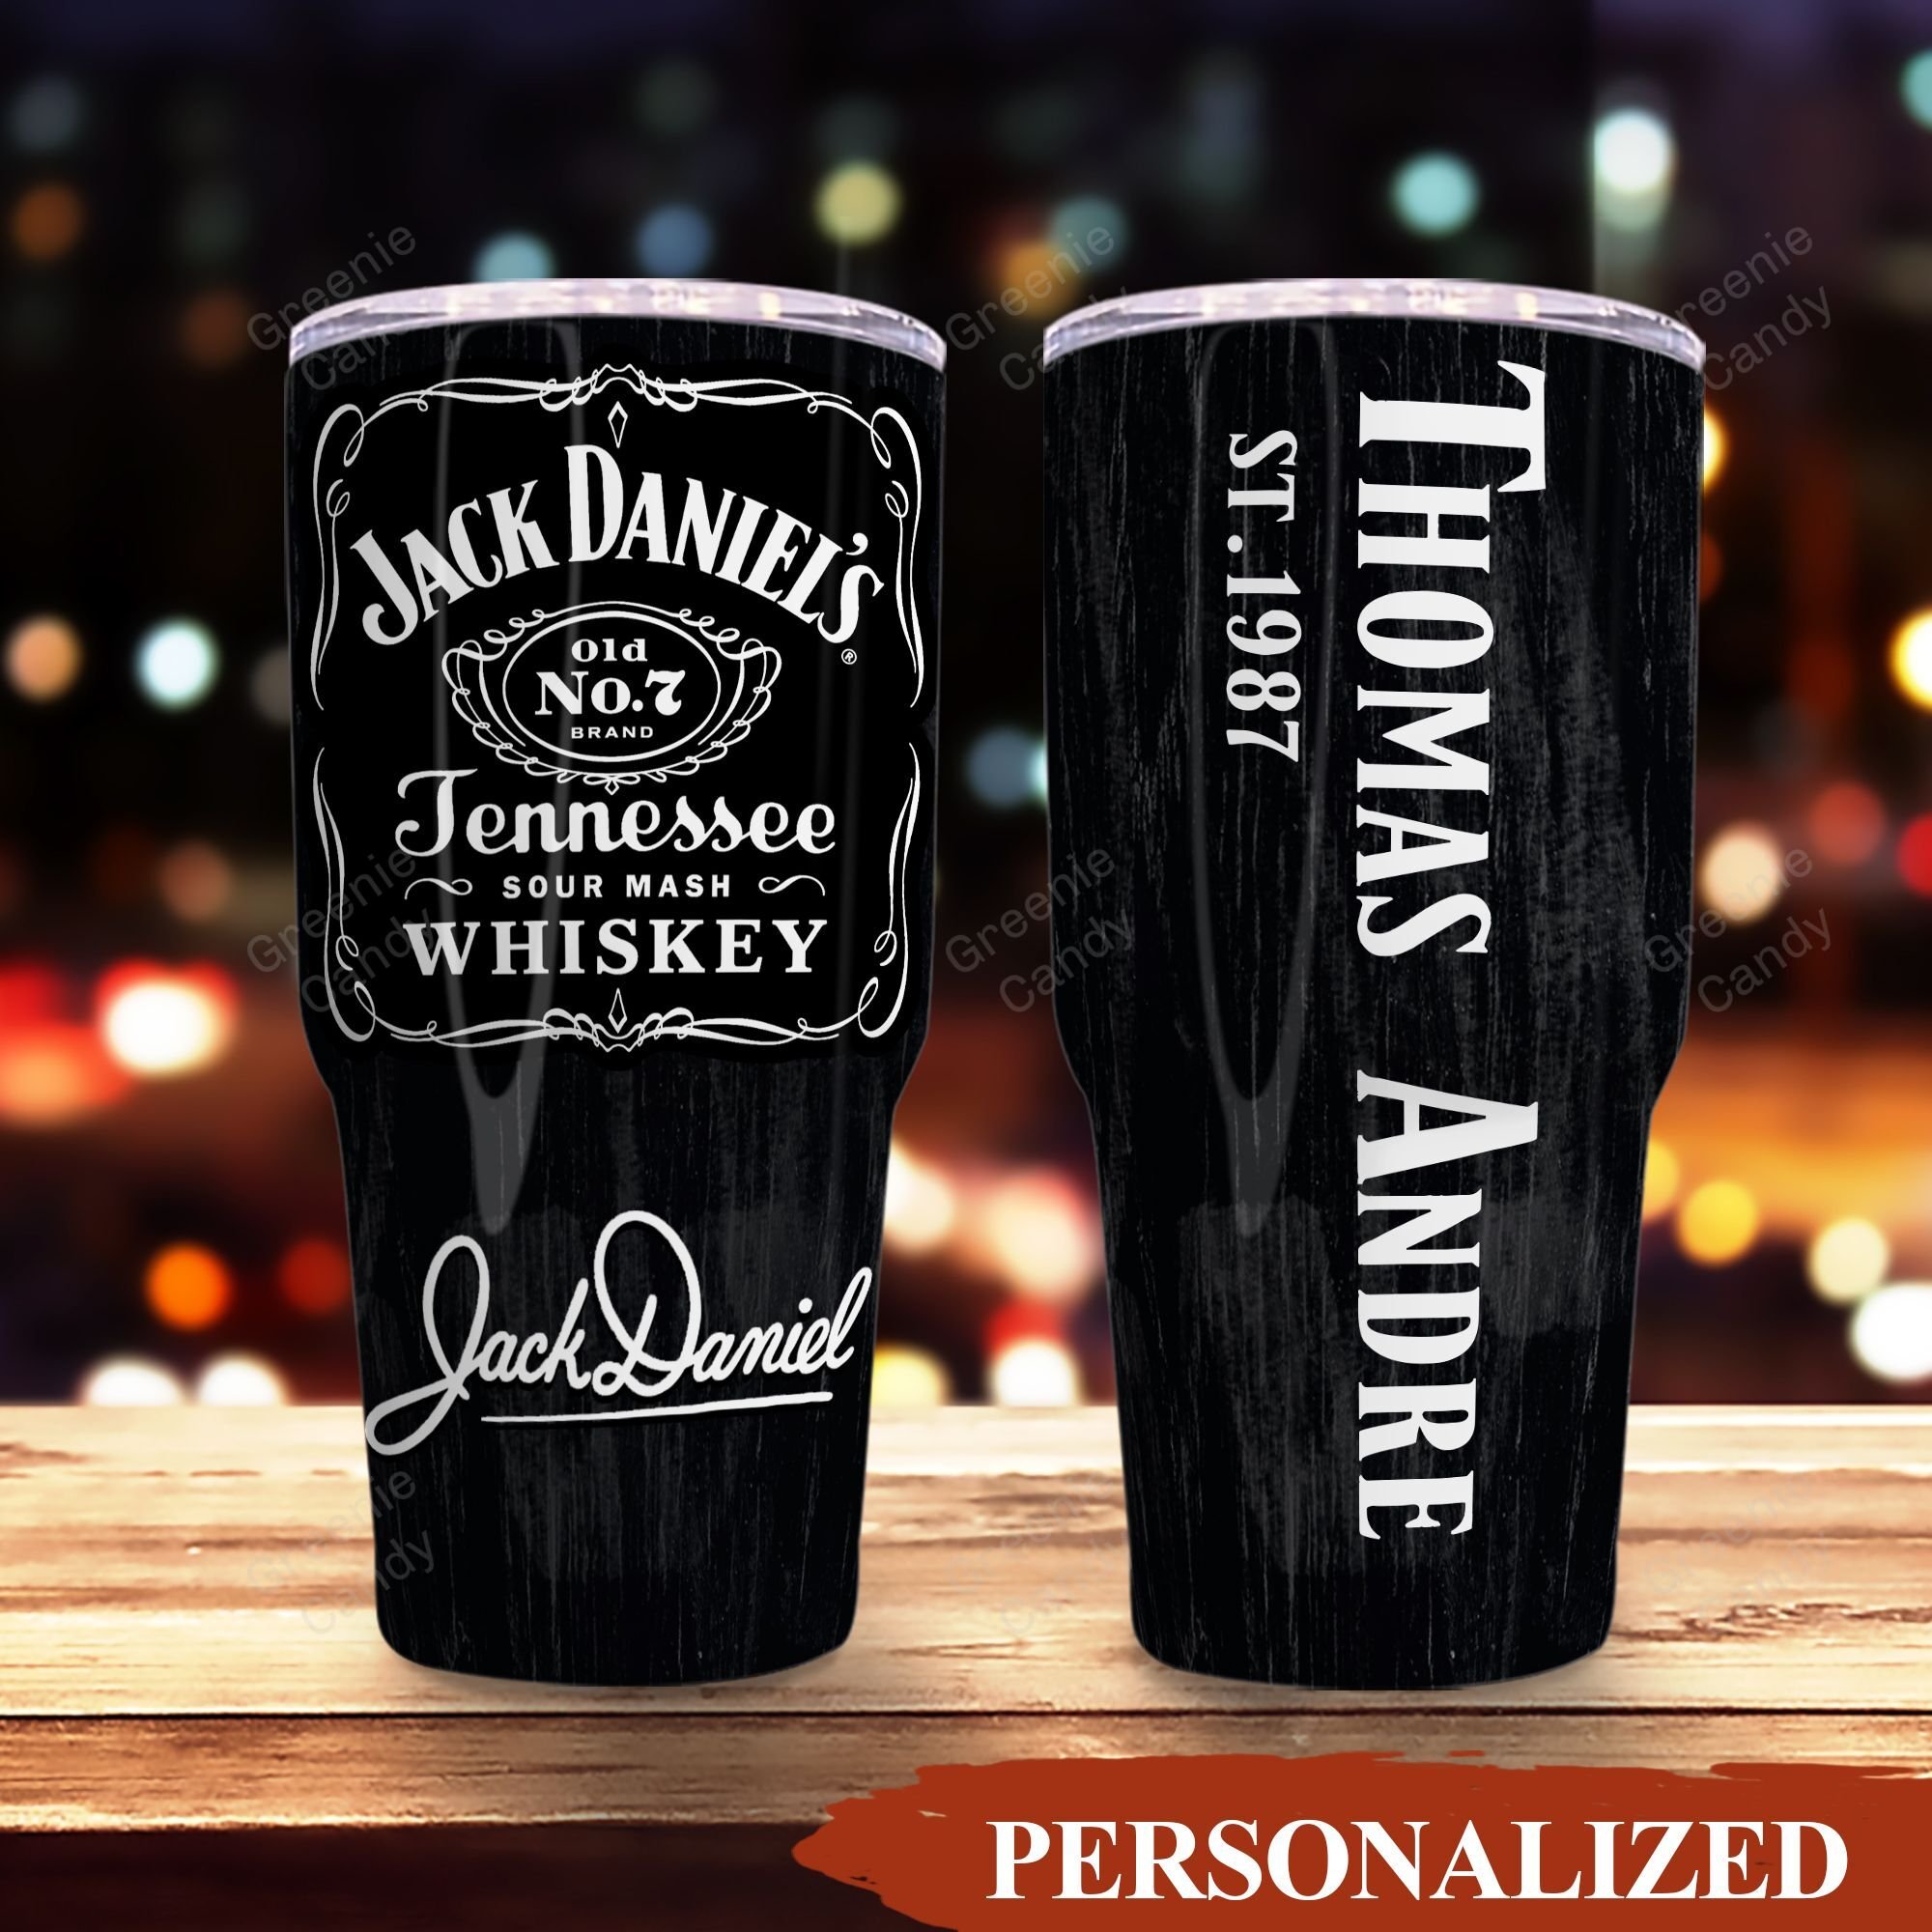 Personalized_Jack_Daniels_Sour_Mash_Whiskey_Tumbler